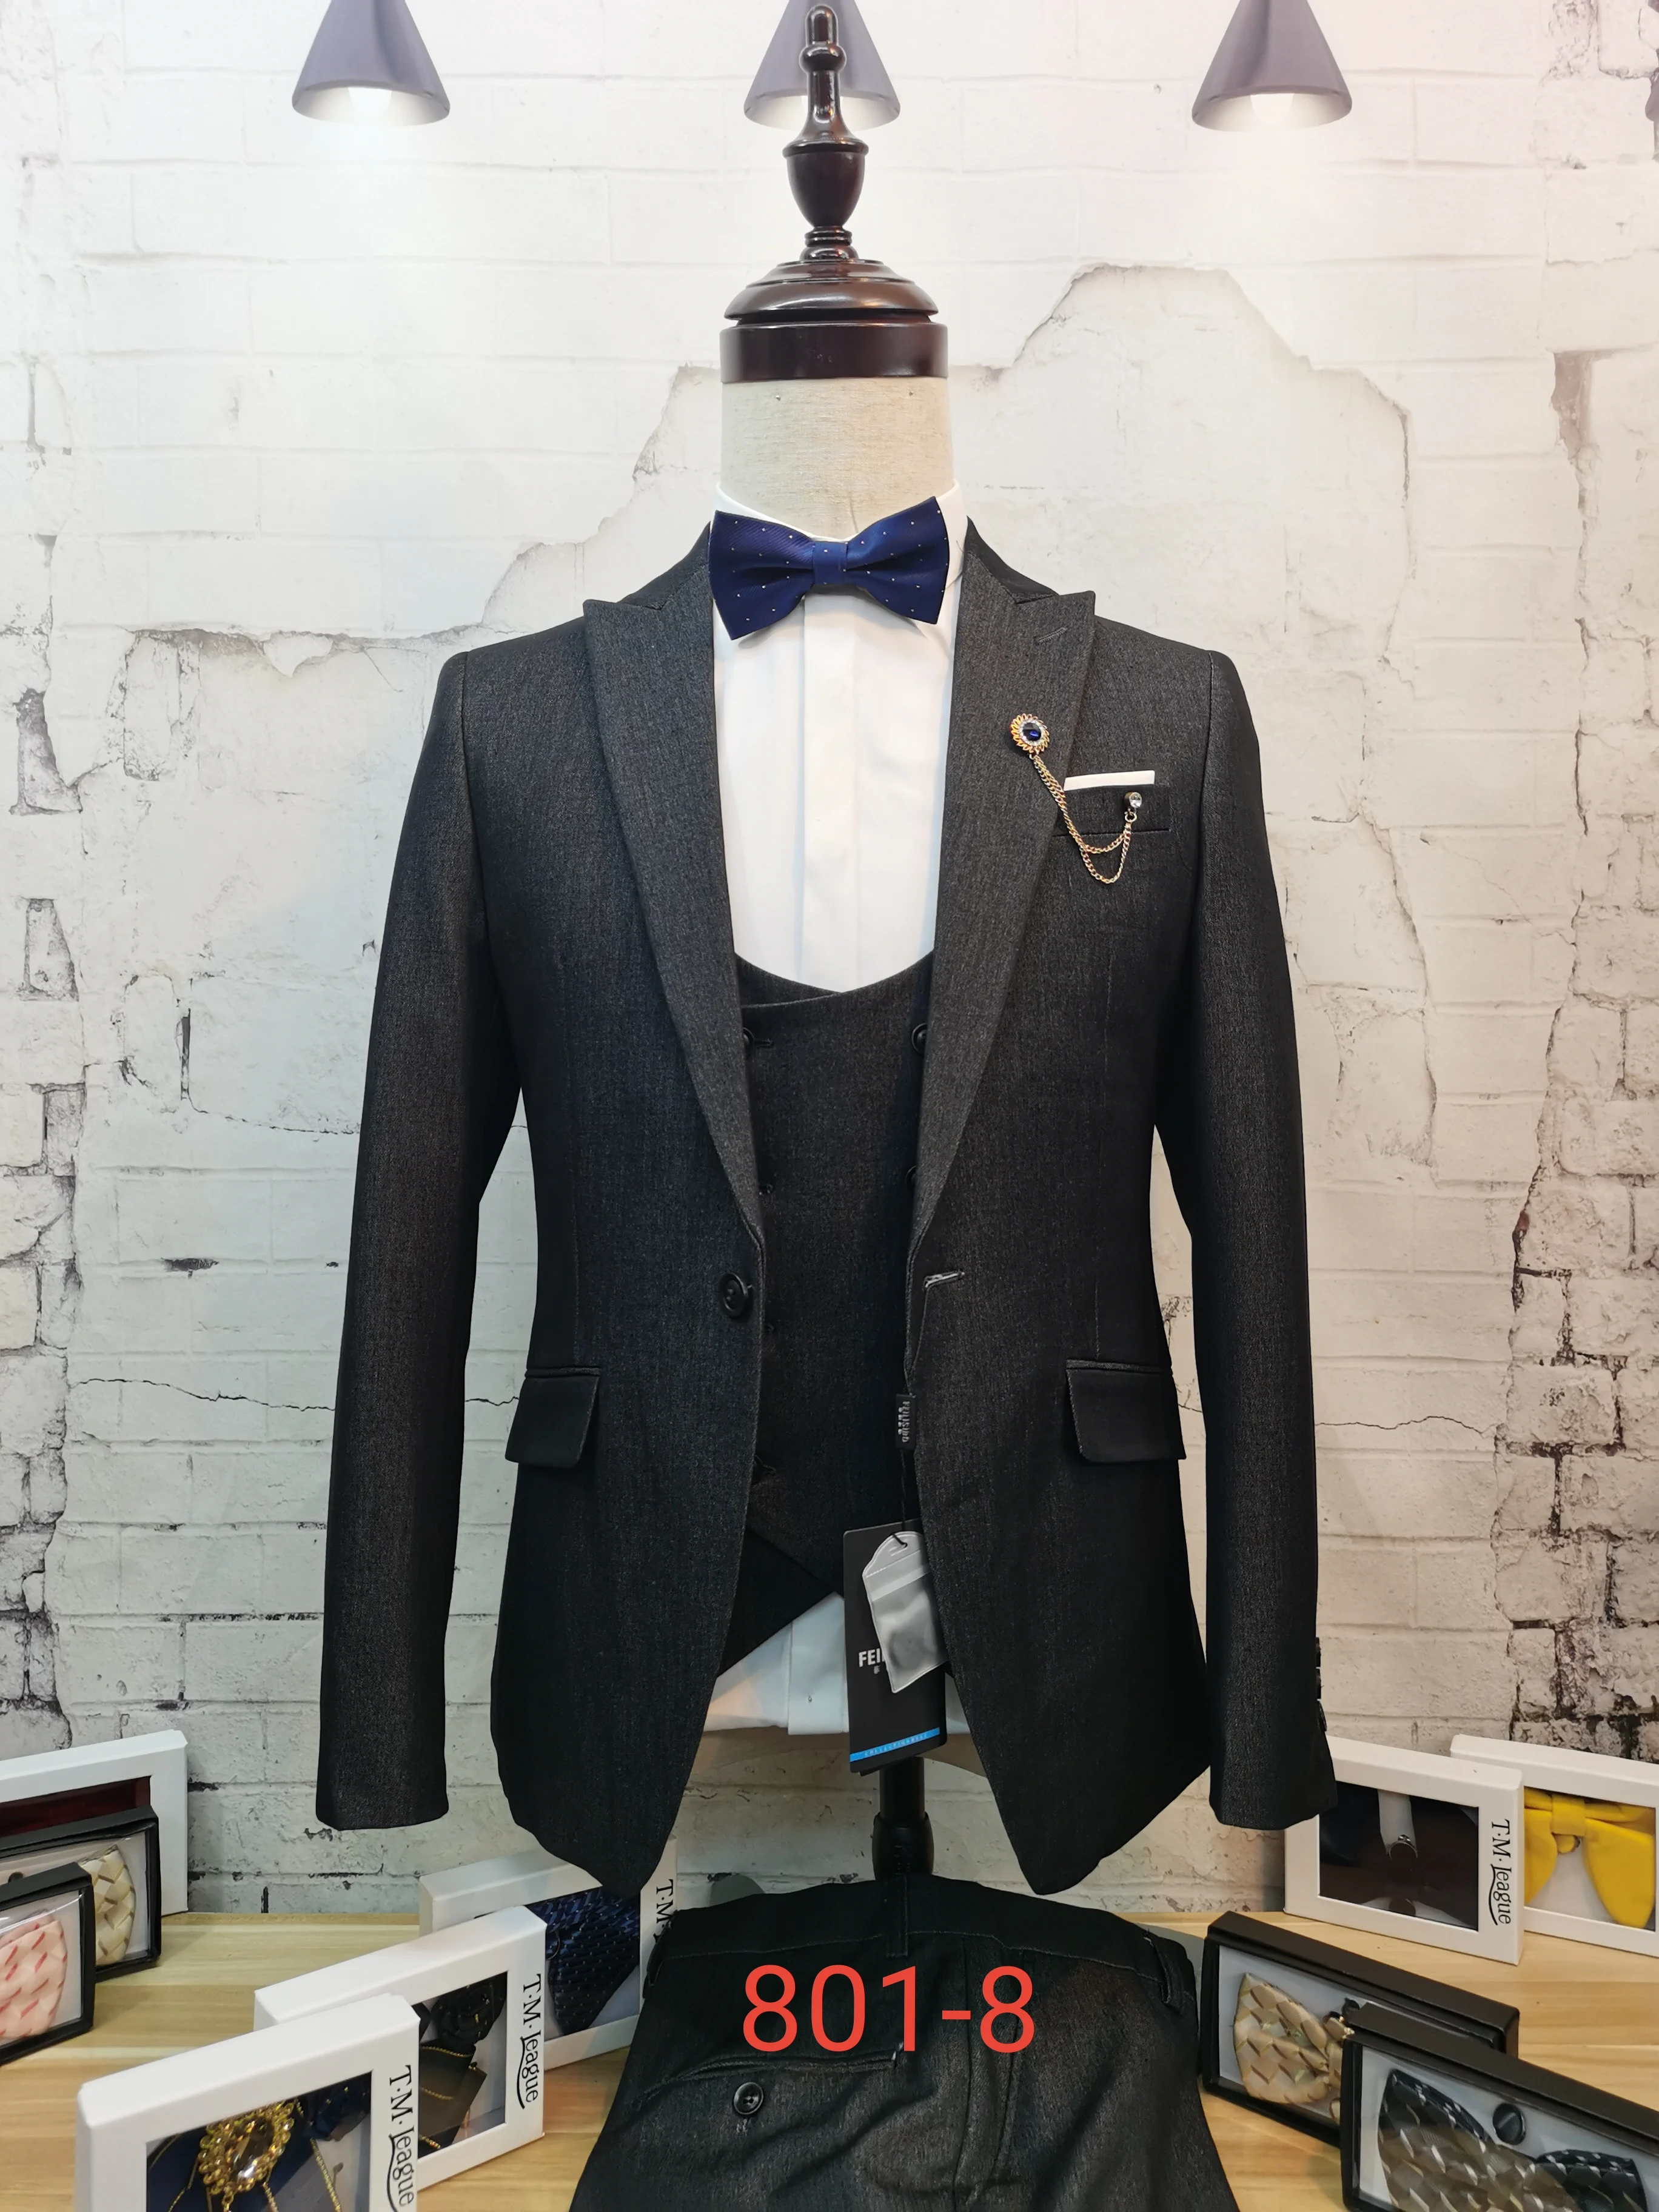 

3 PIECE SET ADULT MENS SLIM FIT SUIT CHARCOAL Grey Polman Quality Brand suit England style Gentleman Wedding Groomsmen Costume